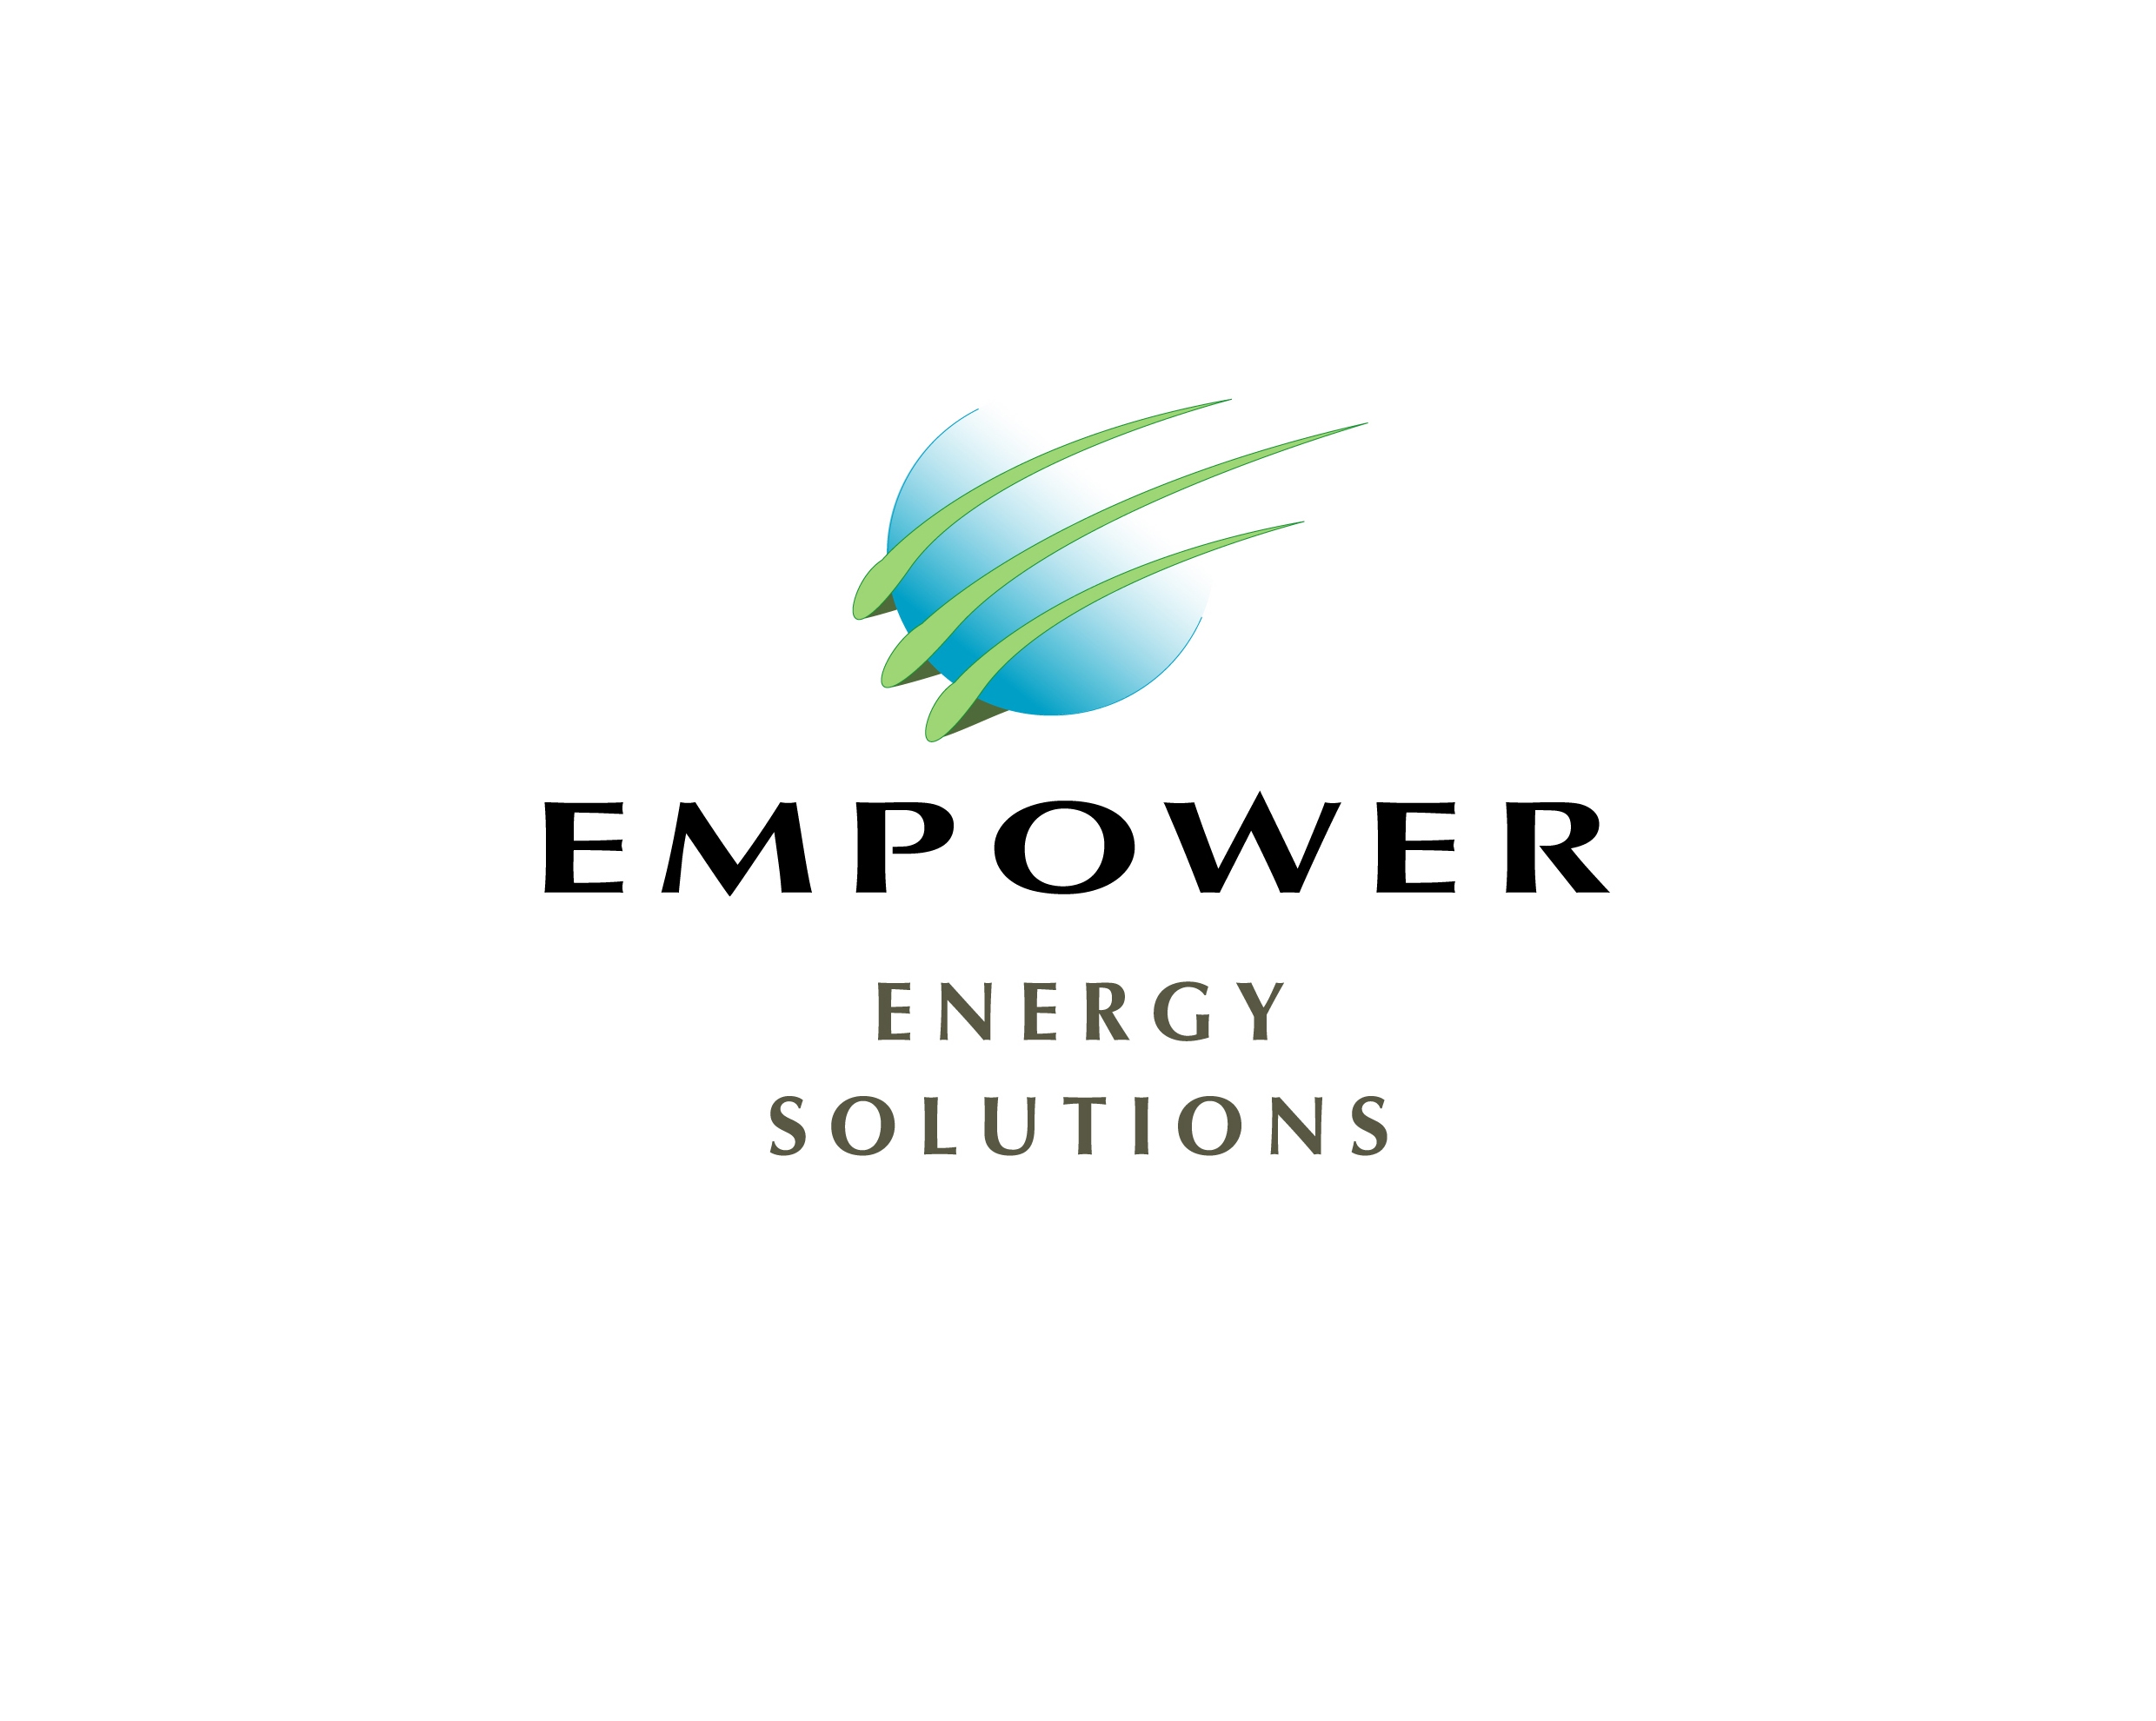 Empower Energy Technology - Crunchbase Company Profile & Funding